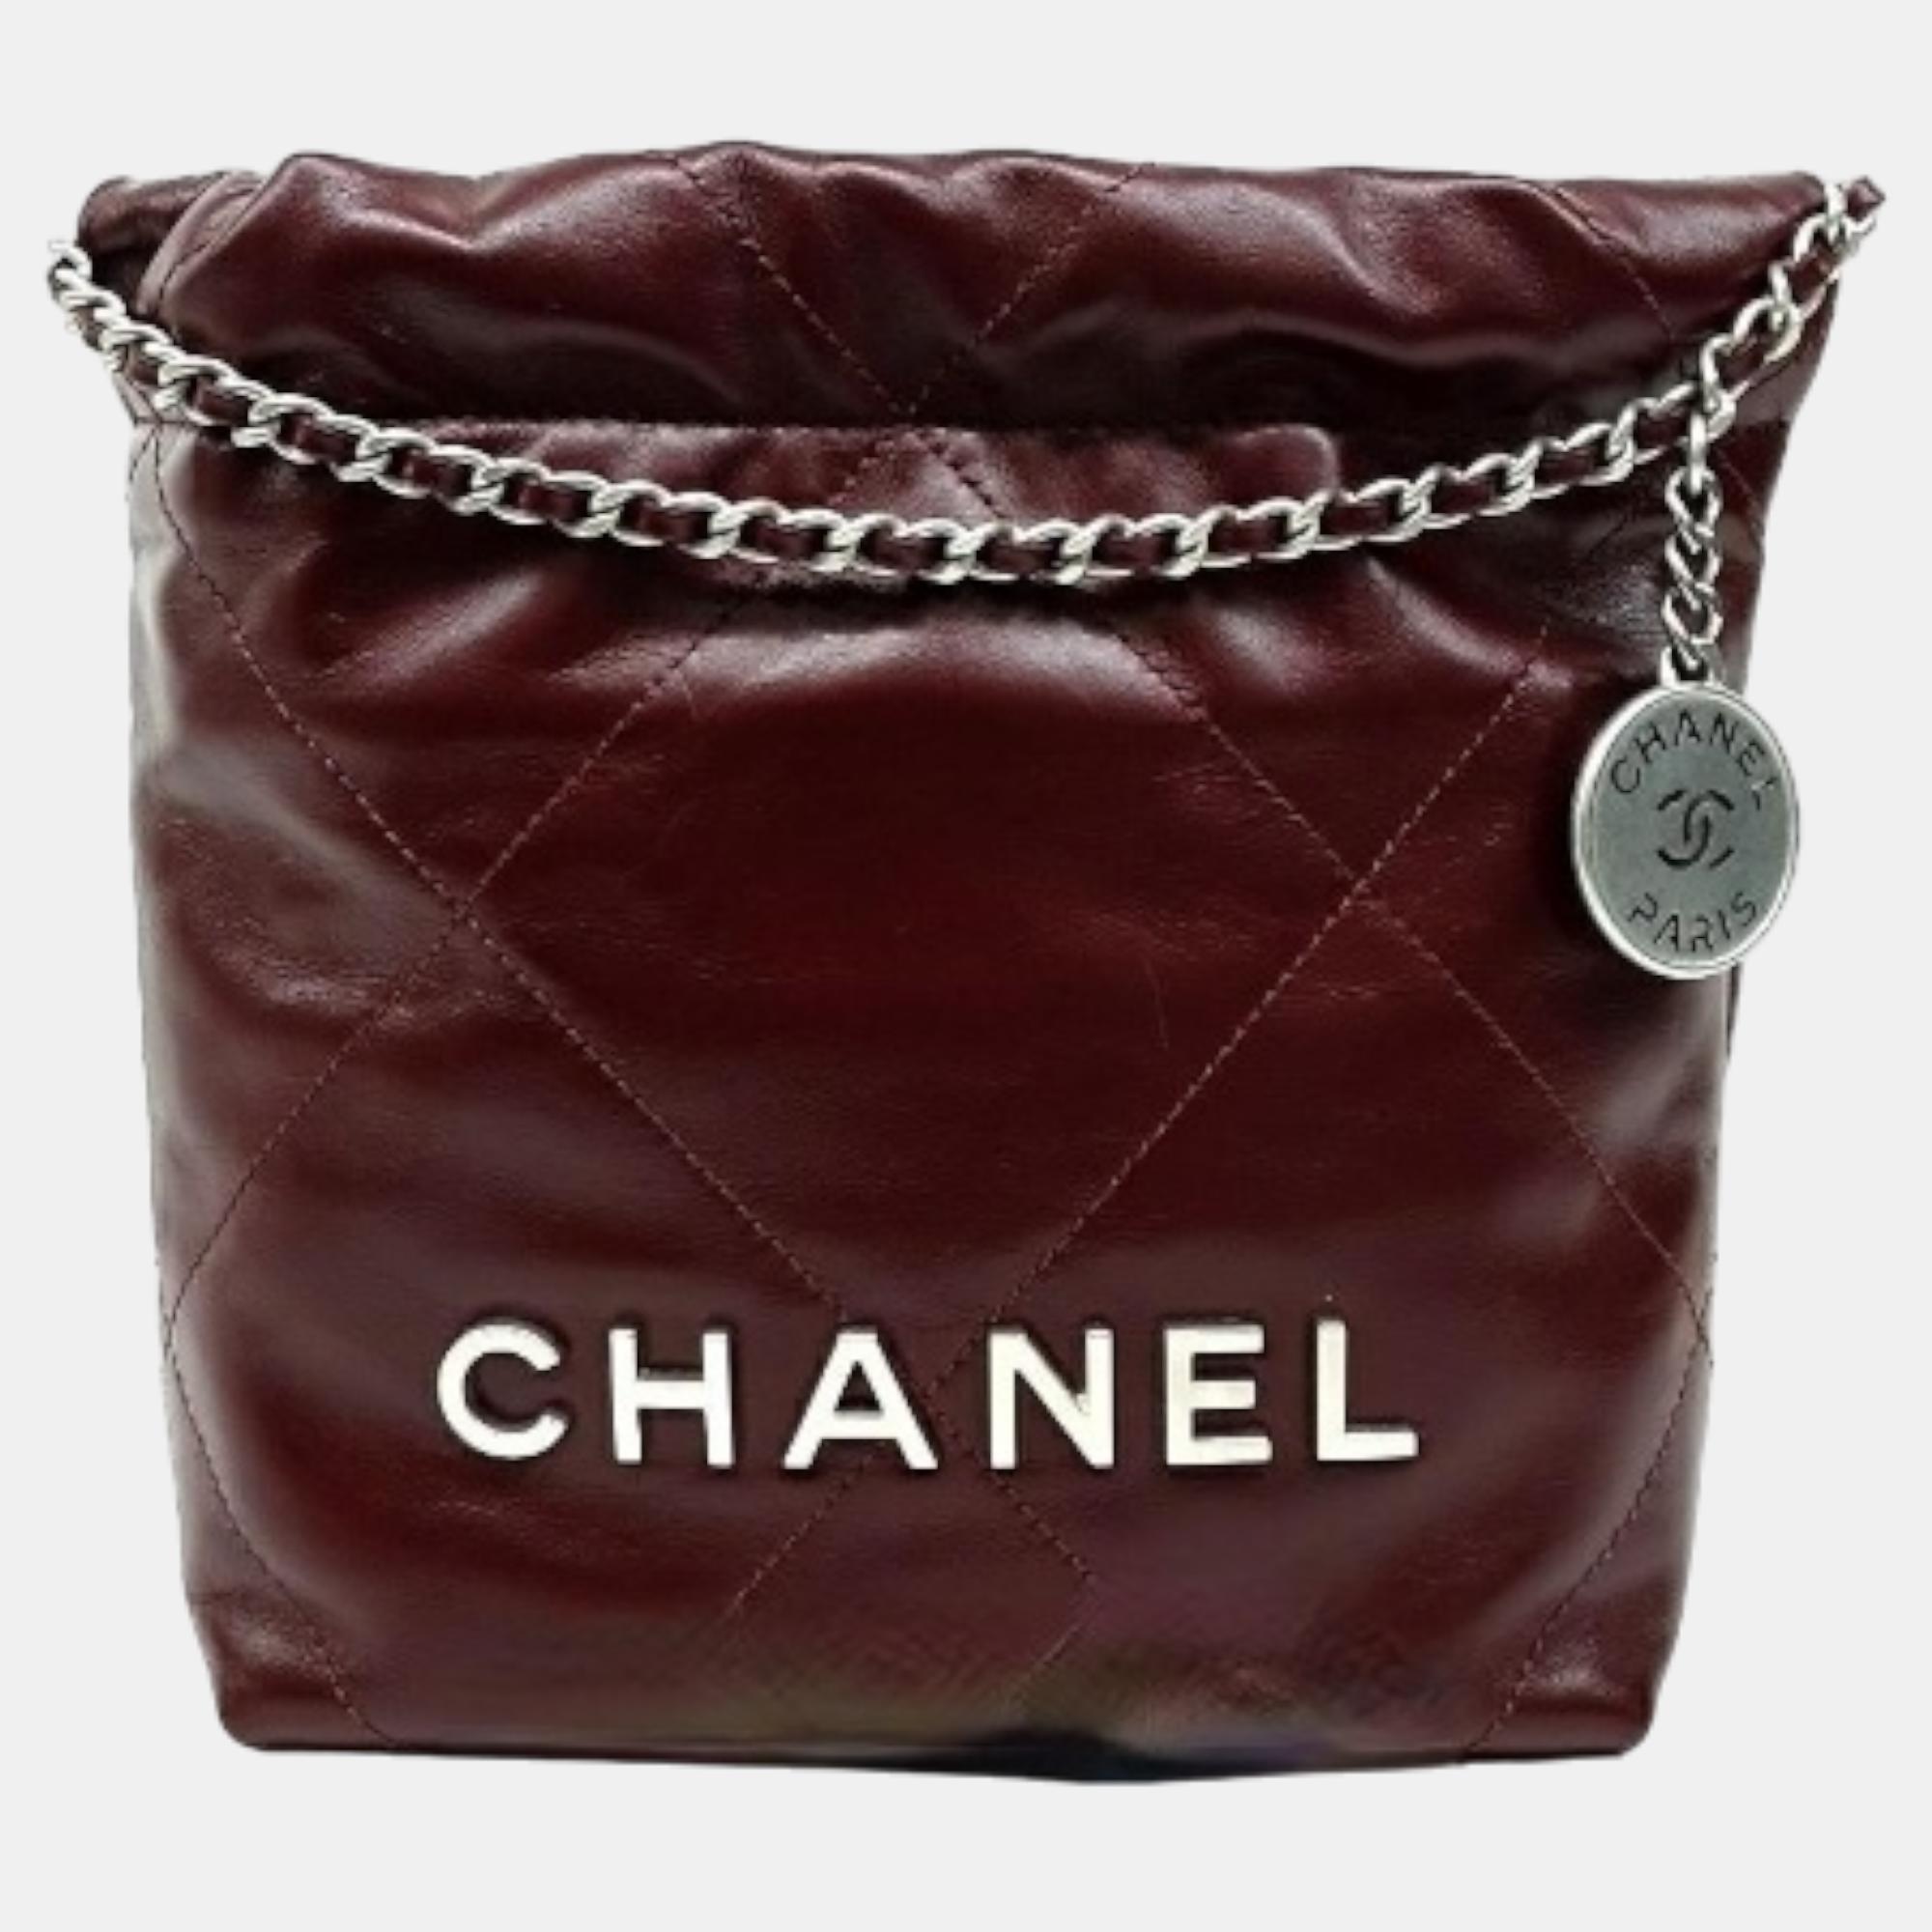 Chanel 22 bag mini